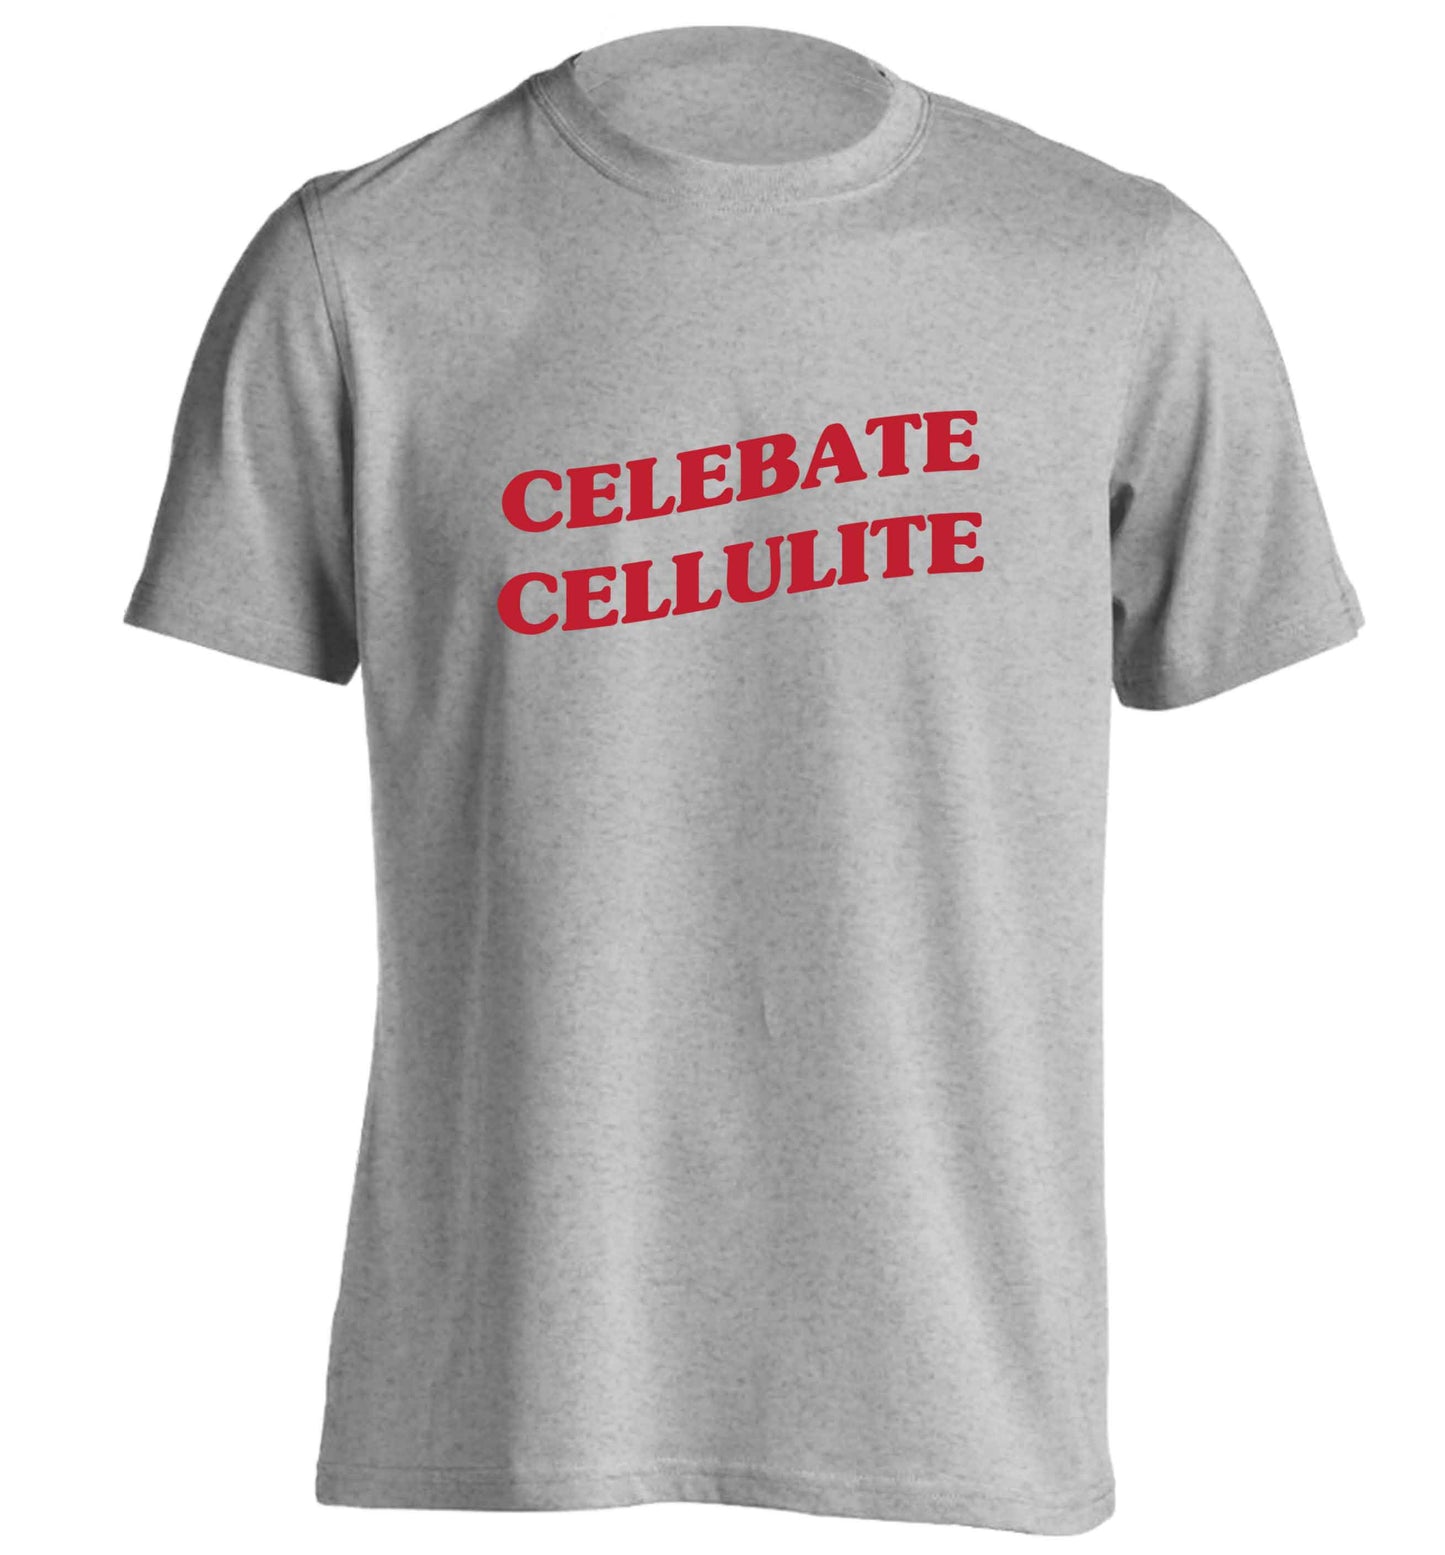 Celebrate cellulite adults unisex grey Tshirt 2XL